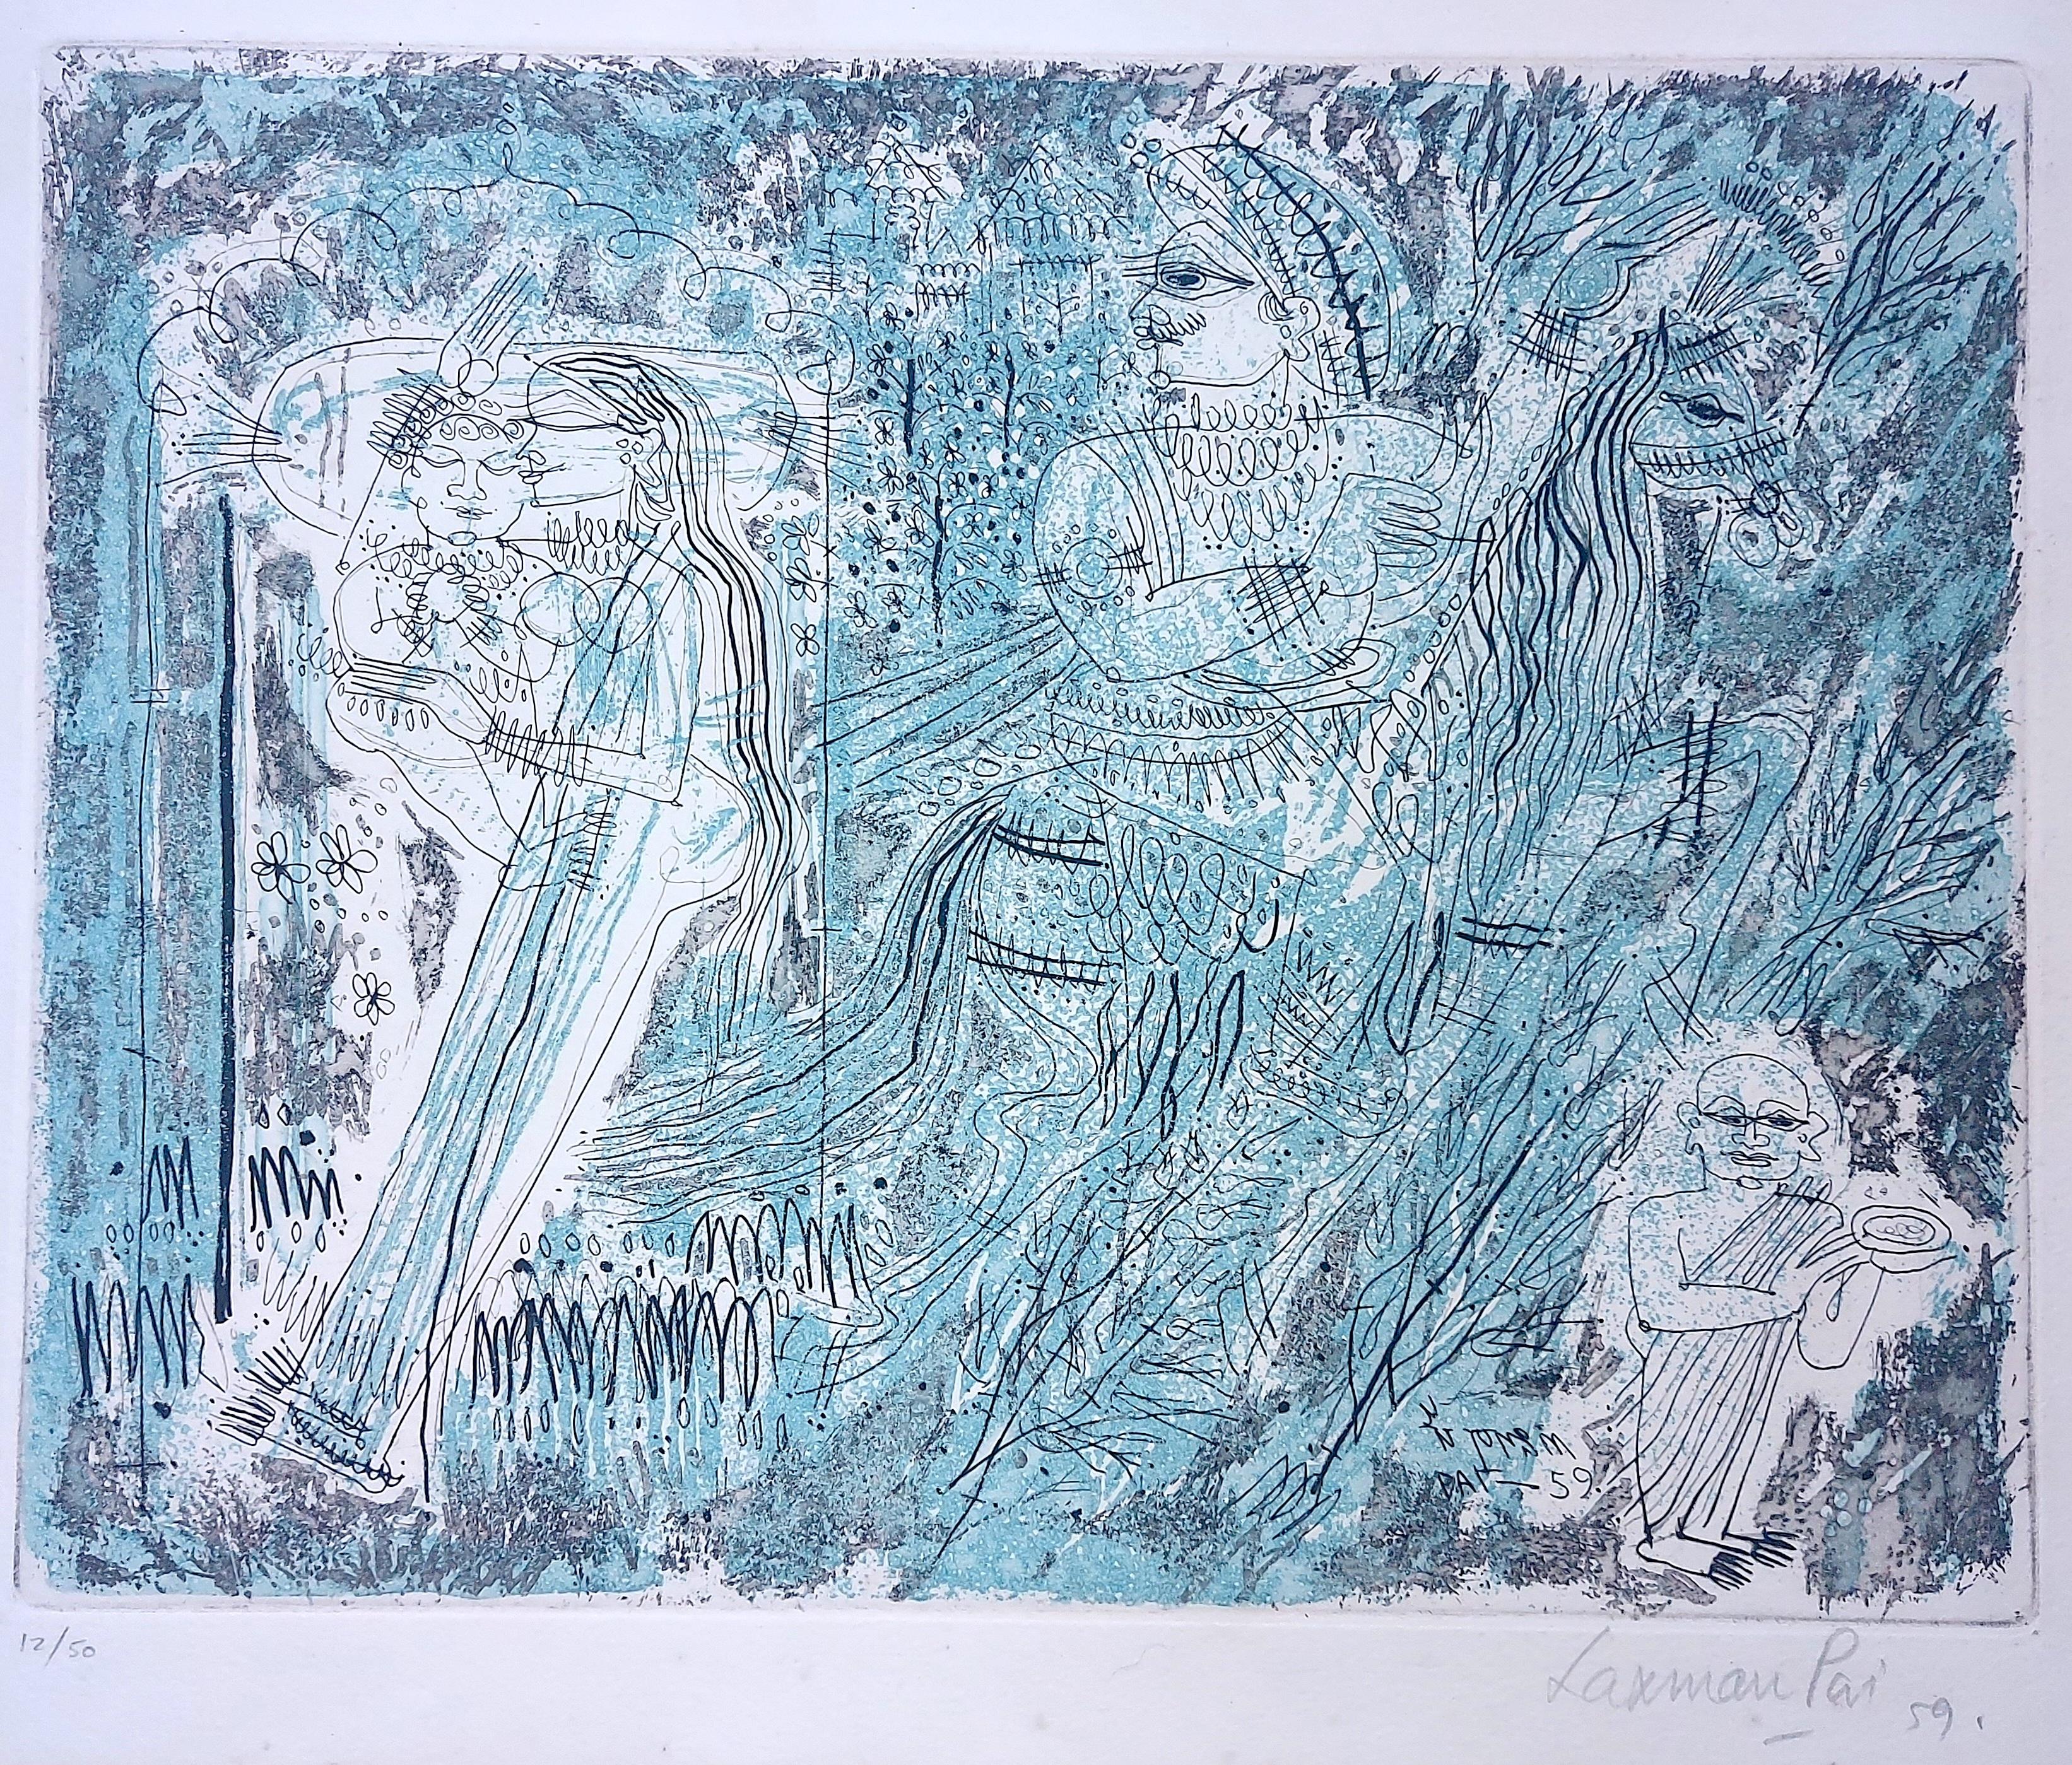 Laxman Pai Abstract Print - Indian Artist Paris Modern Published Etching Goa Mythology Narrative Blue Lovers